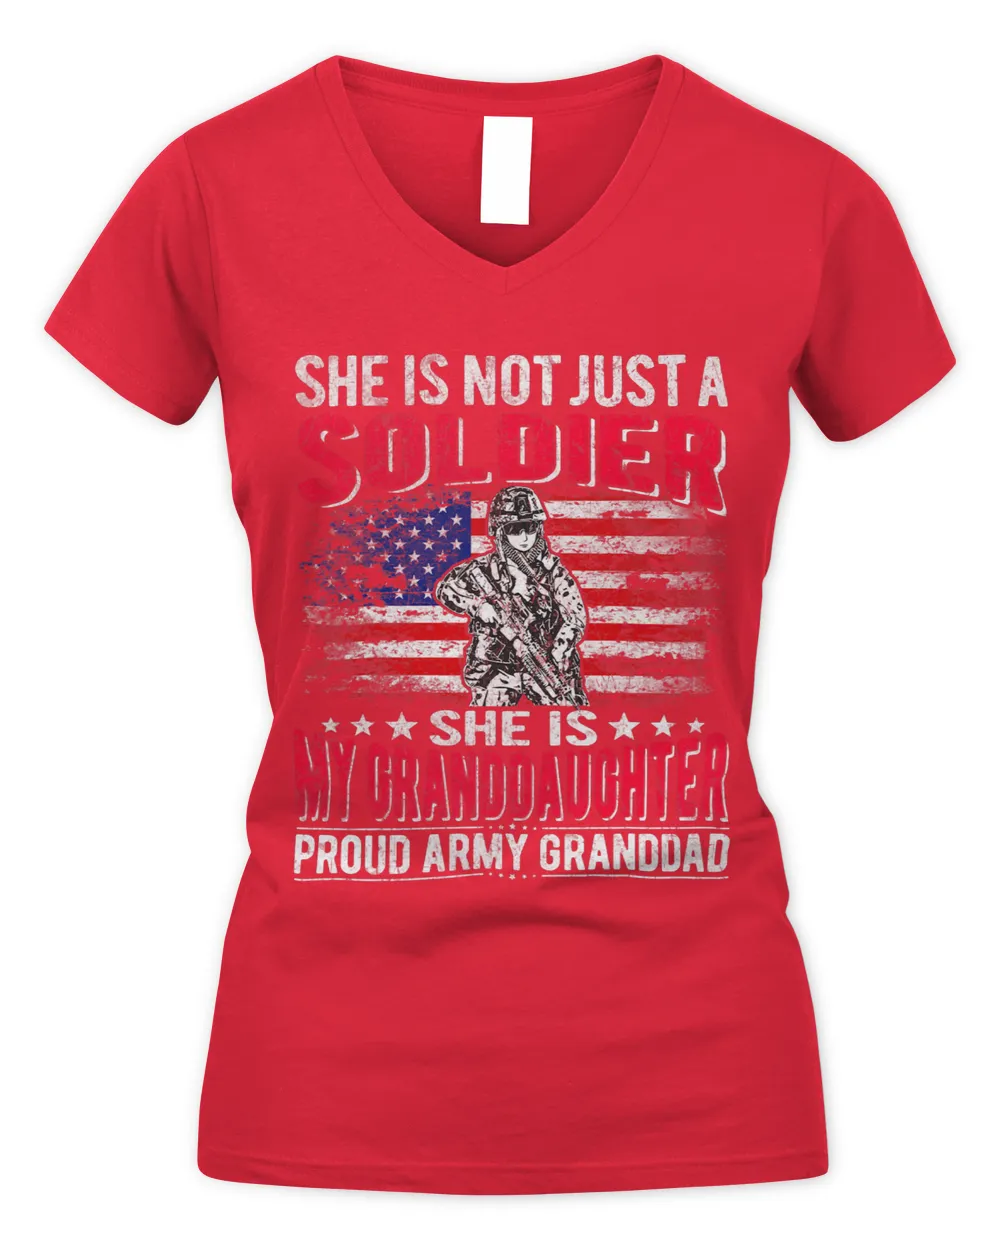 Mens My Granddaughter My Soldier Proud Army Granddad Grandpa Gift